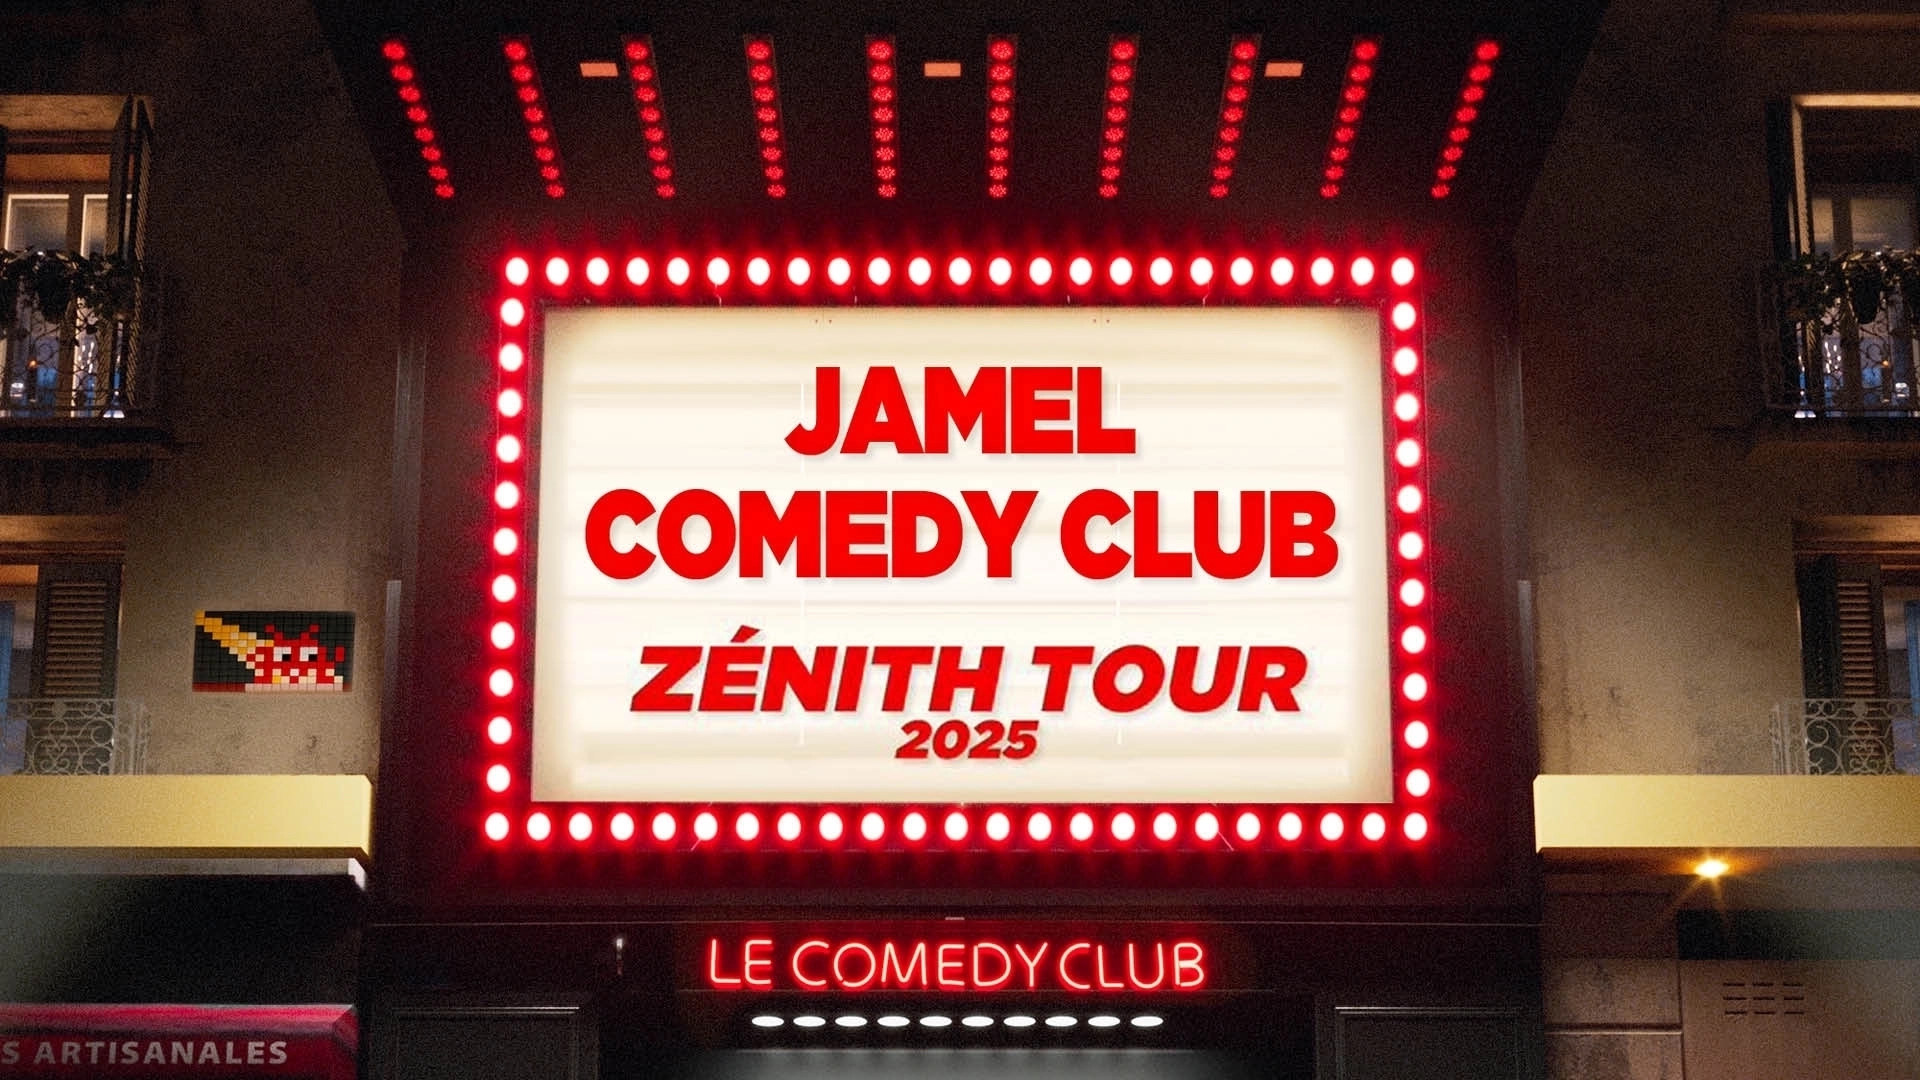 Jamel Comedy Club Zenith Tour 2025 at Reims Arena Tickets